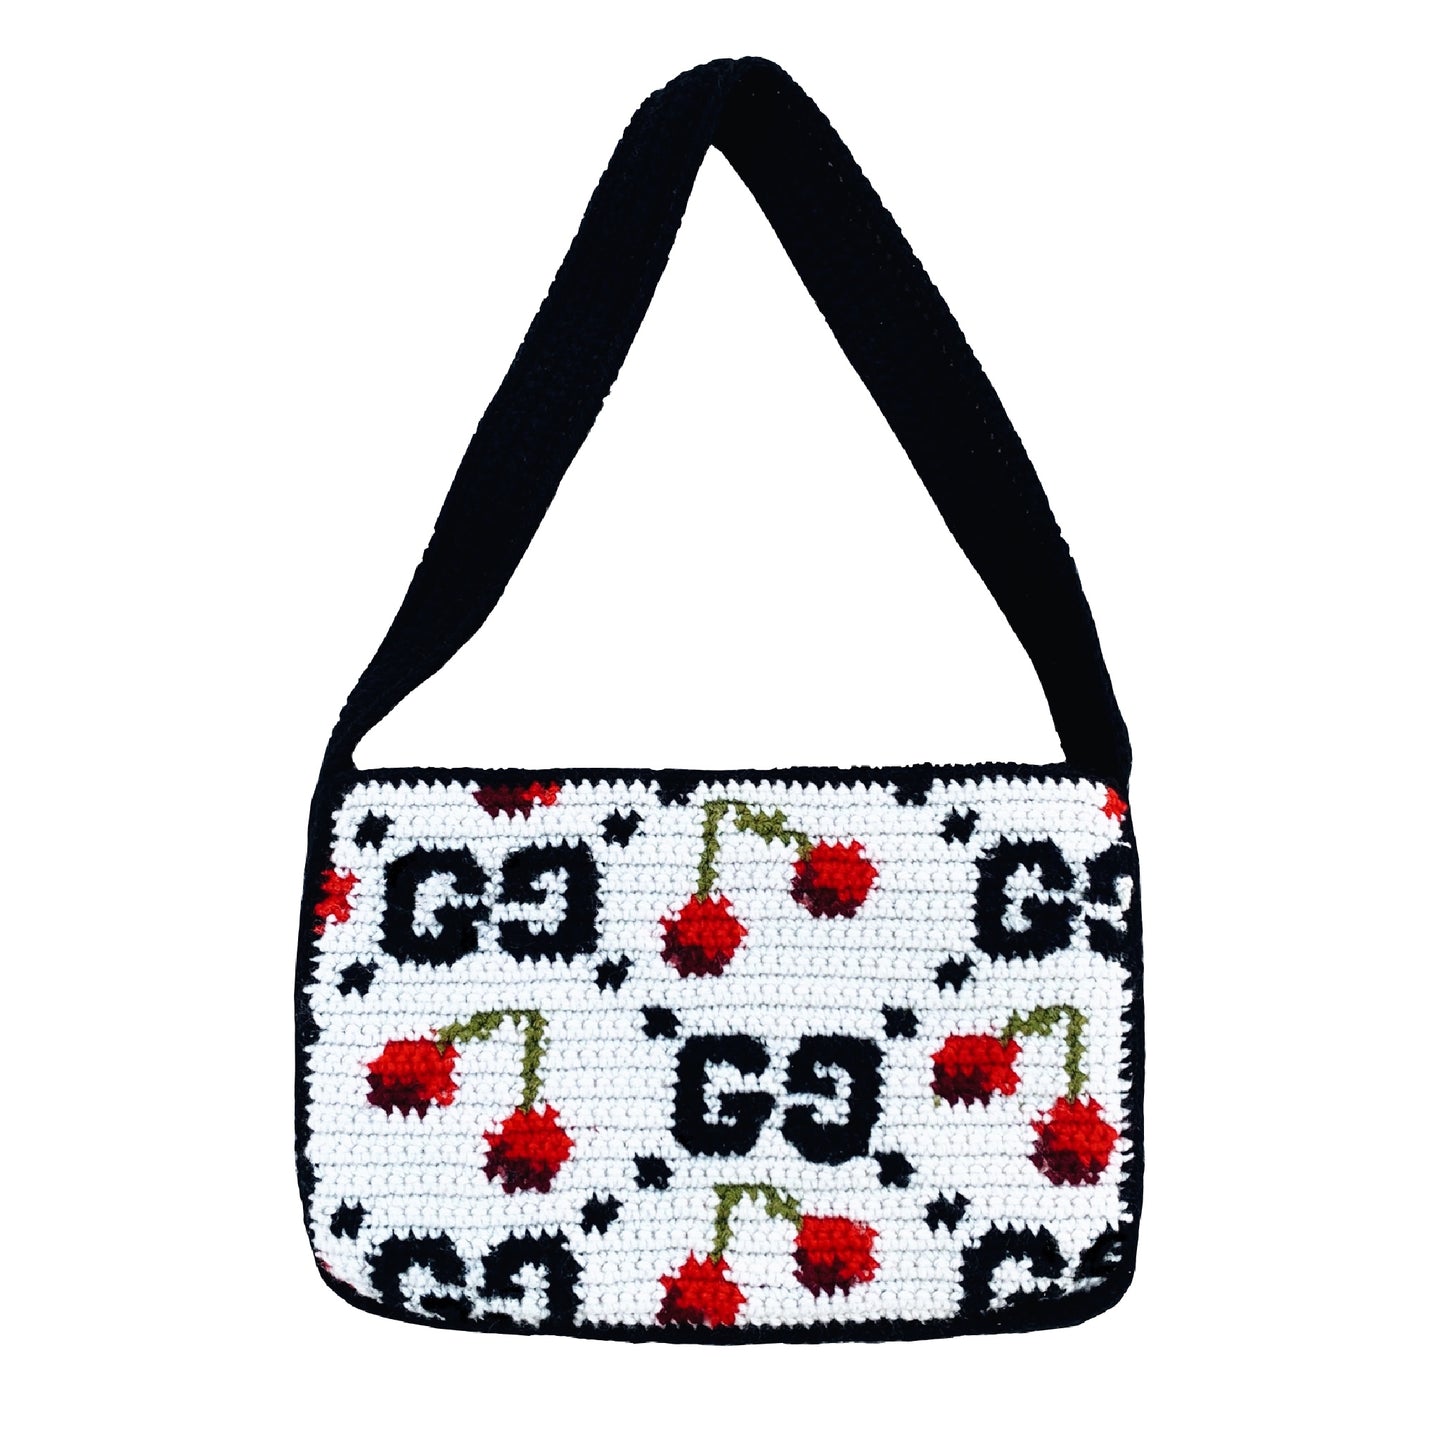 Bougie Cherry Shoulder Bag by Carolannie Crochet